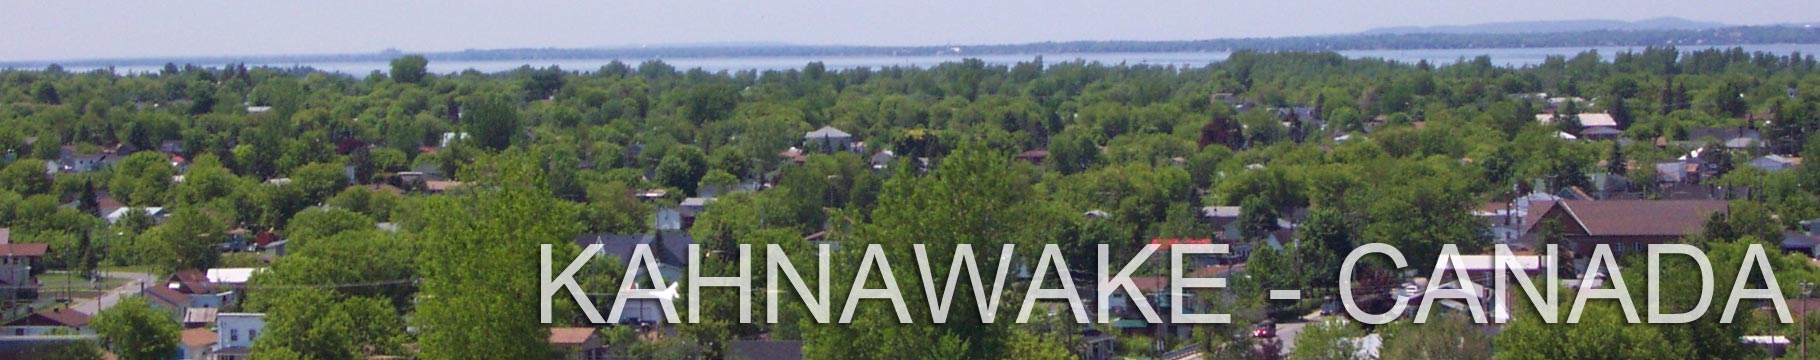 Kahnawake Canada